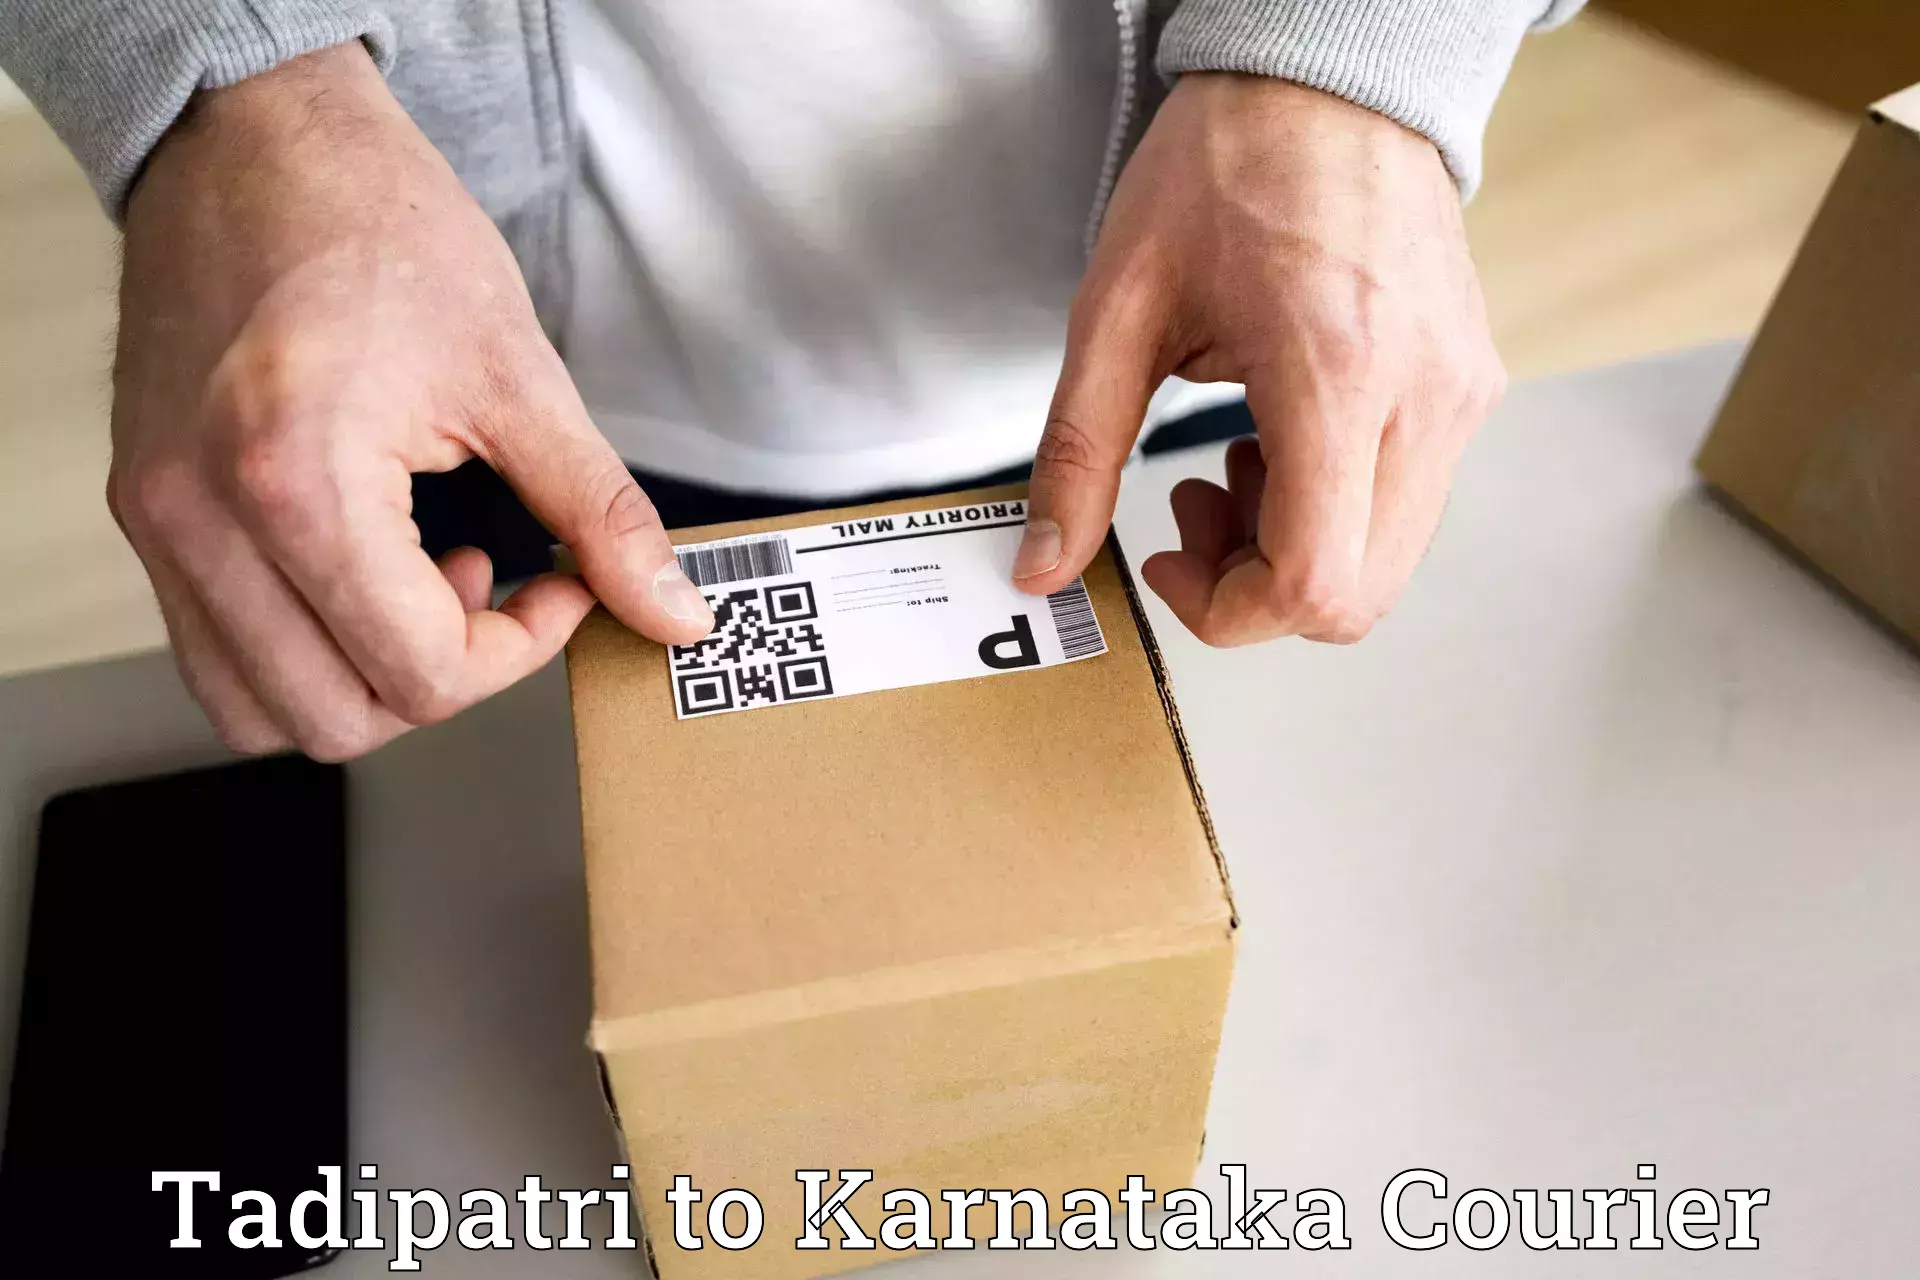 Next-generation courier services Tadipatri to Karnataka